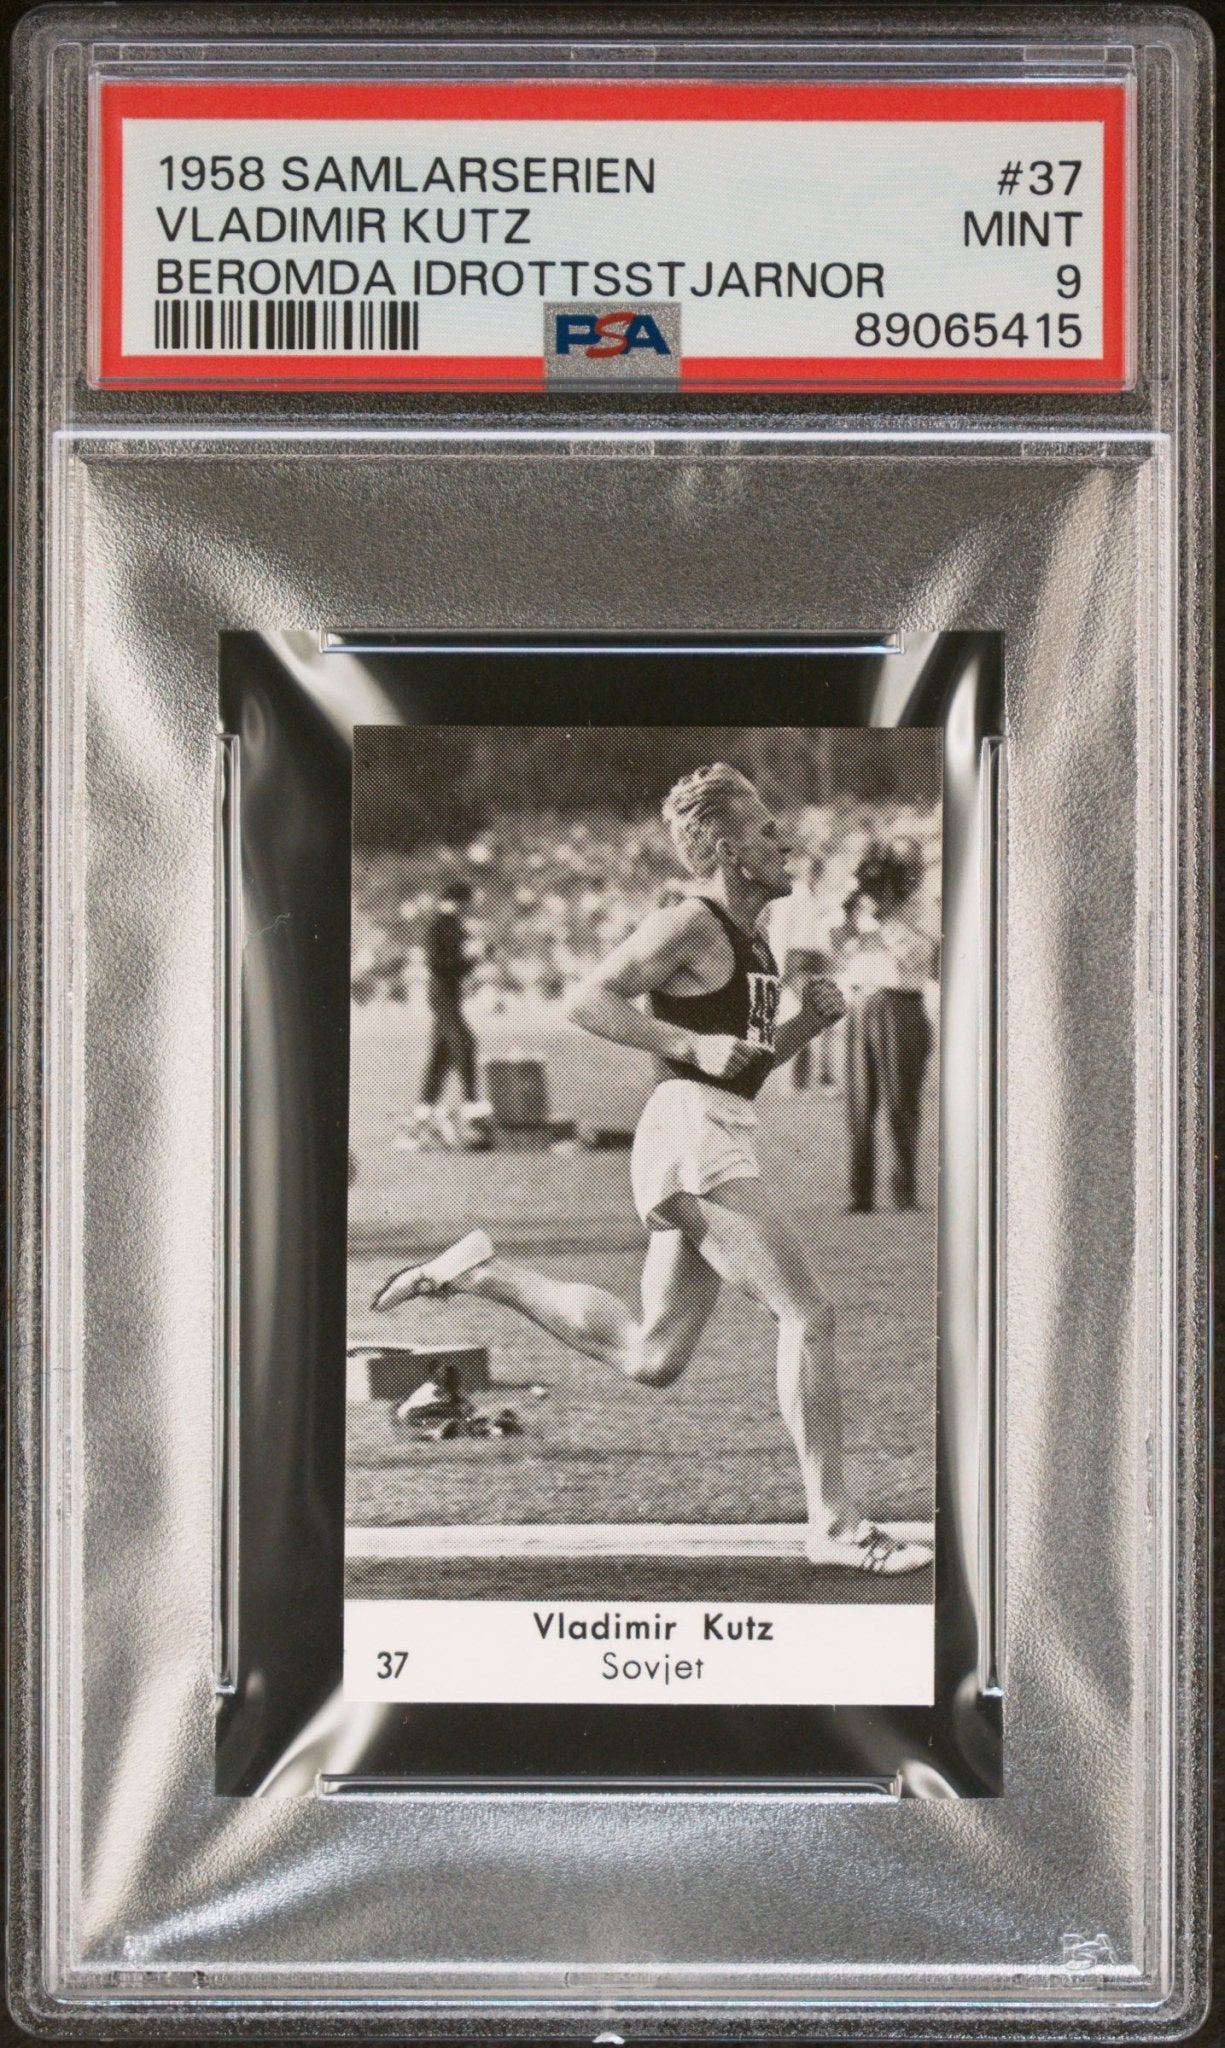 VLADIMIR KUTZ PSA 9 1958 Samlarserien Beromda Idrottsstjarnor Olympic Runner #37 Misc - Sports Base Graded Cards - Hobby Gems